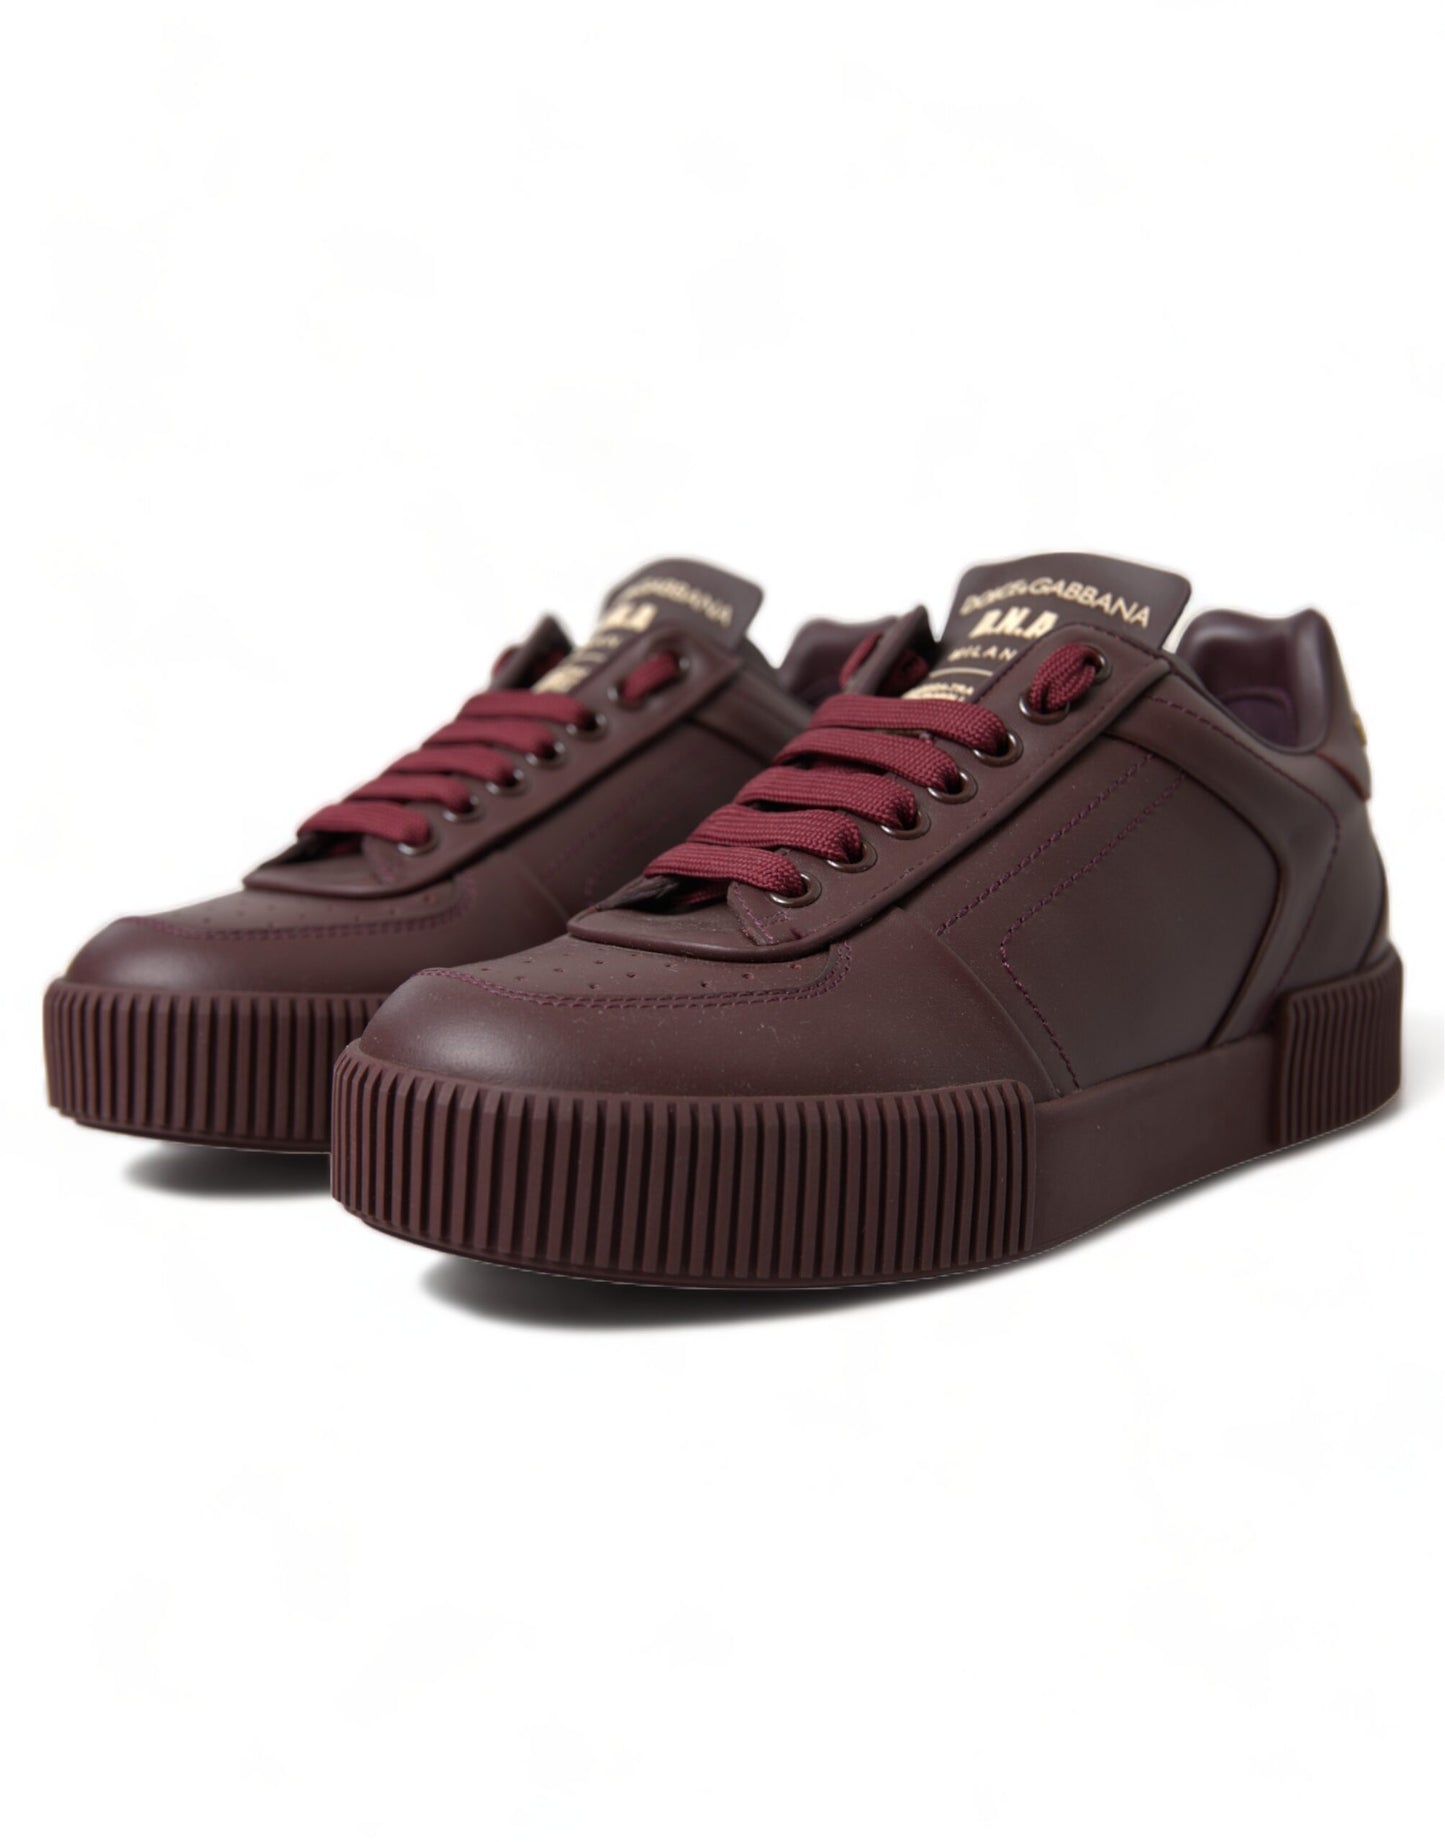 Dolce & Gabbana Elegant Bordeaux Leather Sneakers